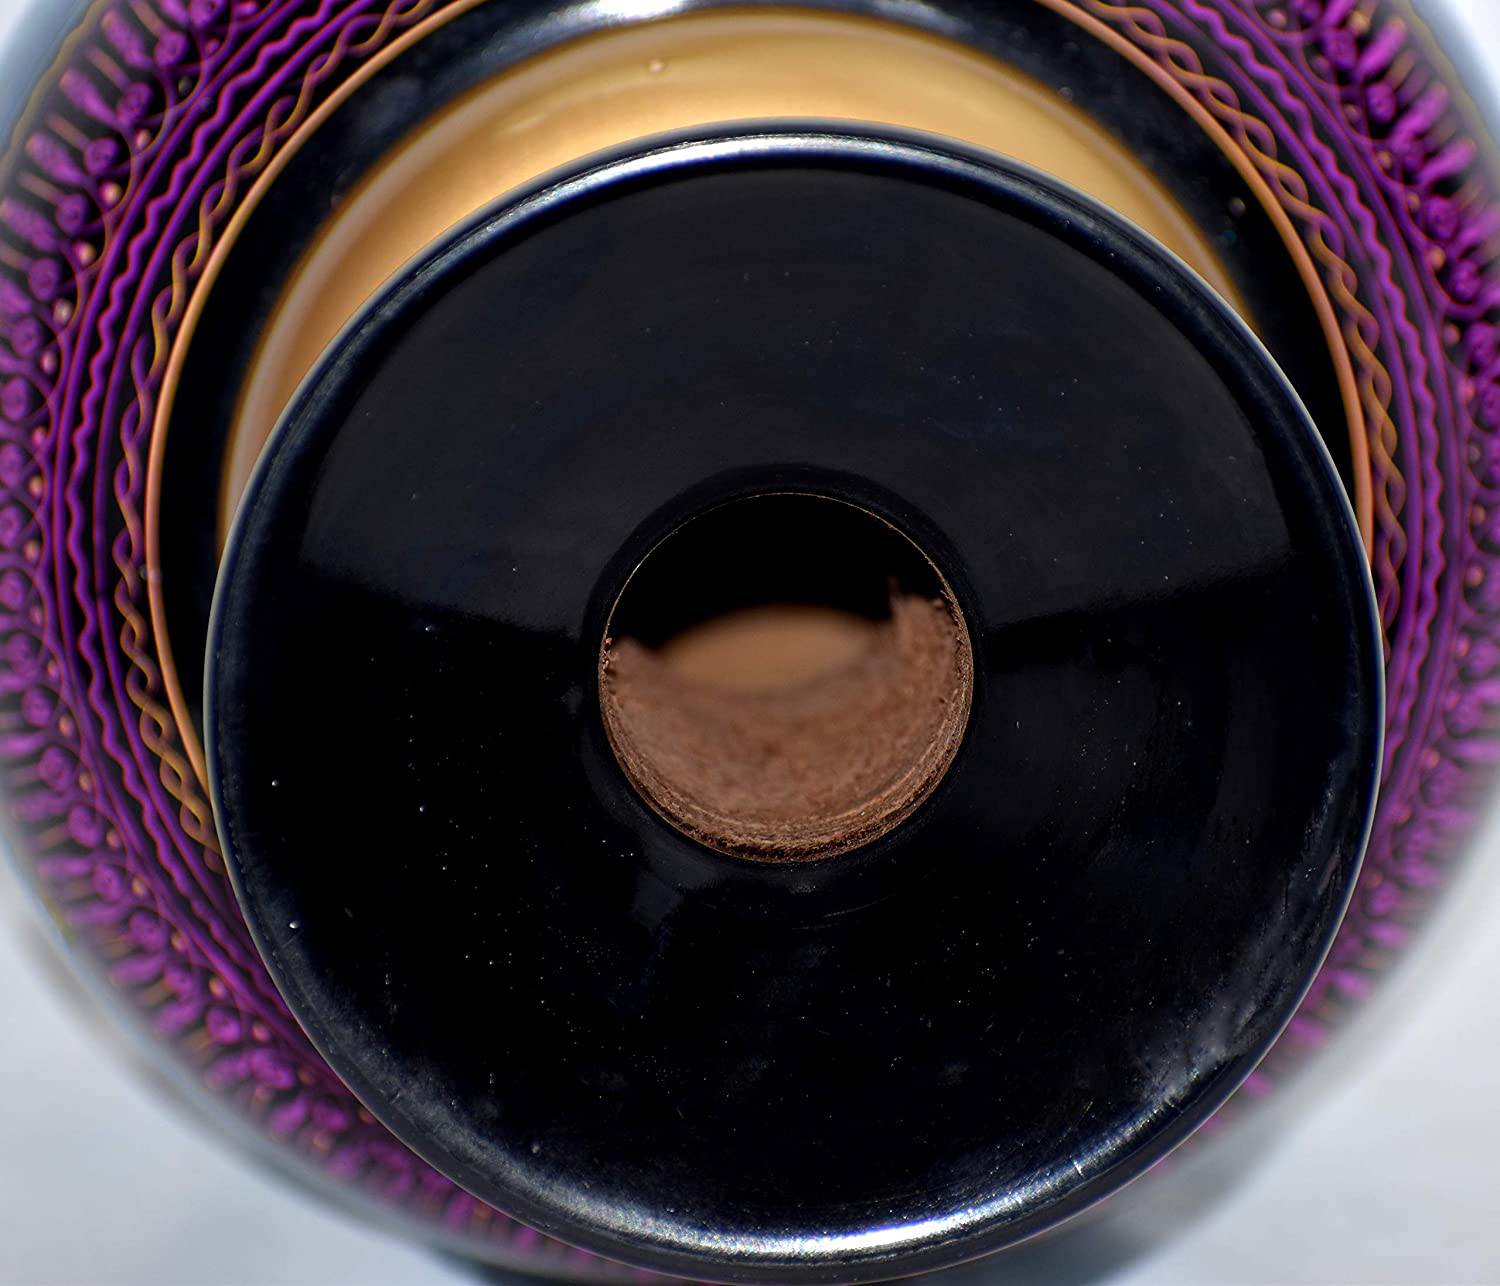 Handmade Modern Colorful Engraved Lacquer Art Decorative Vase,  16' Purple - Intense oud